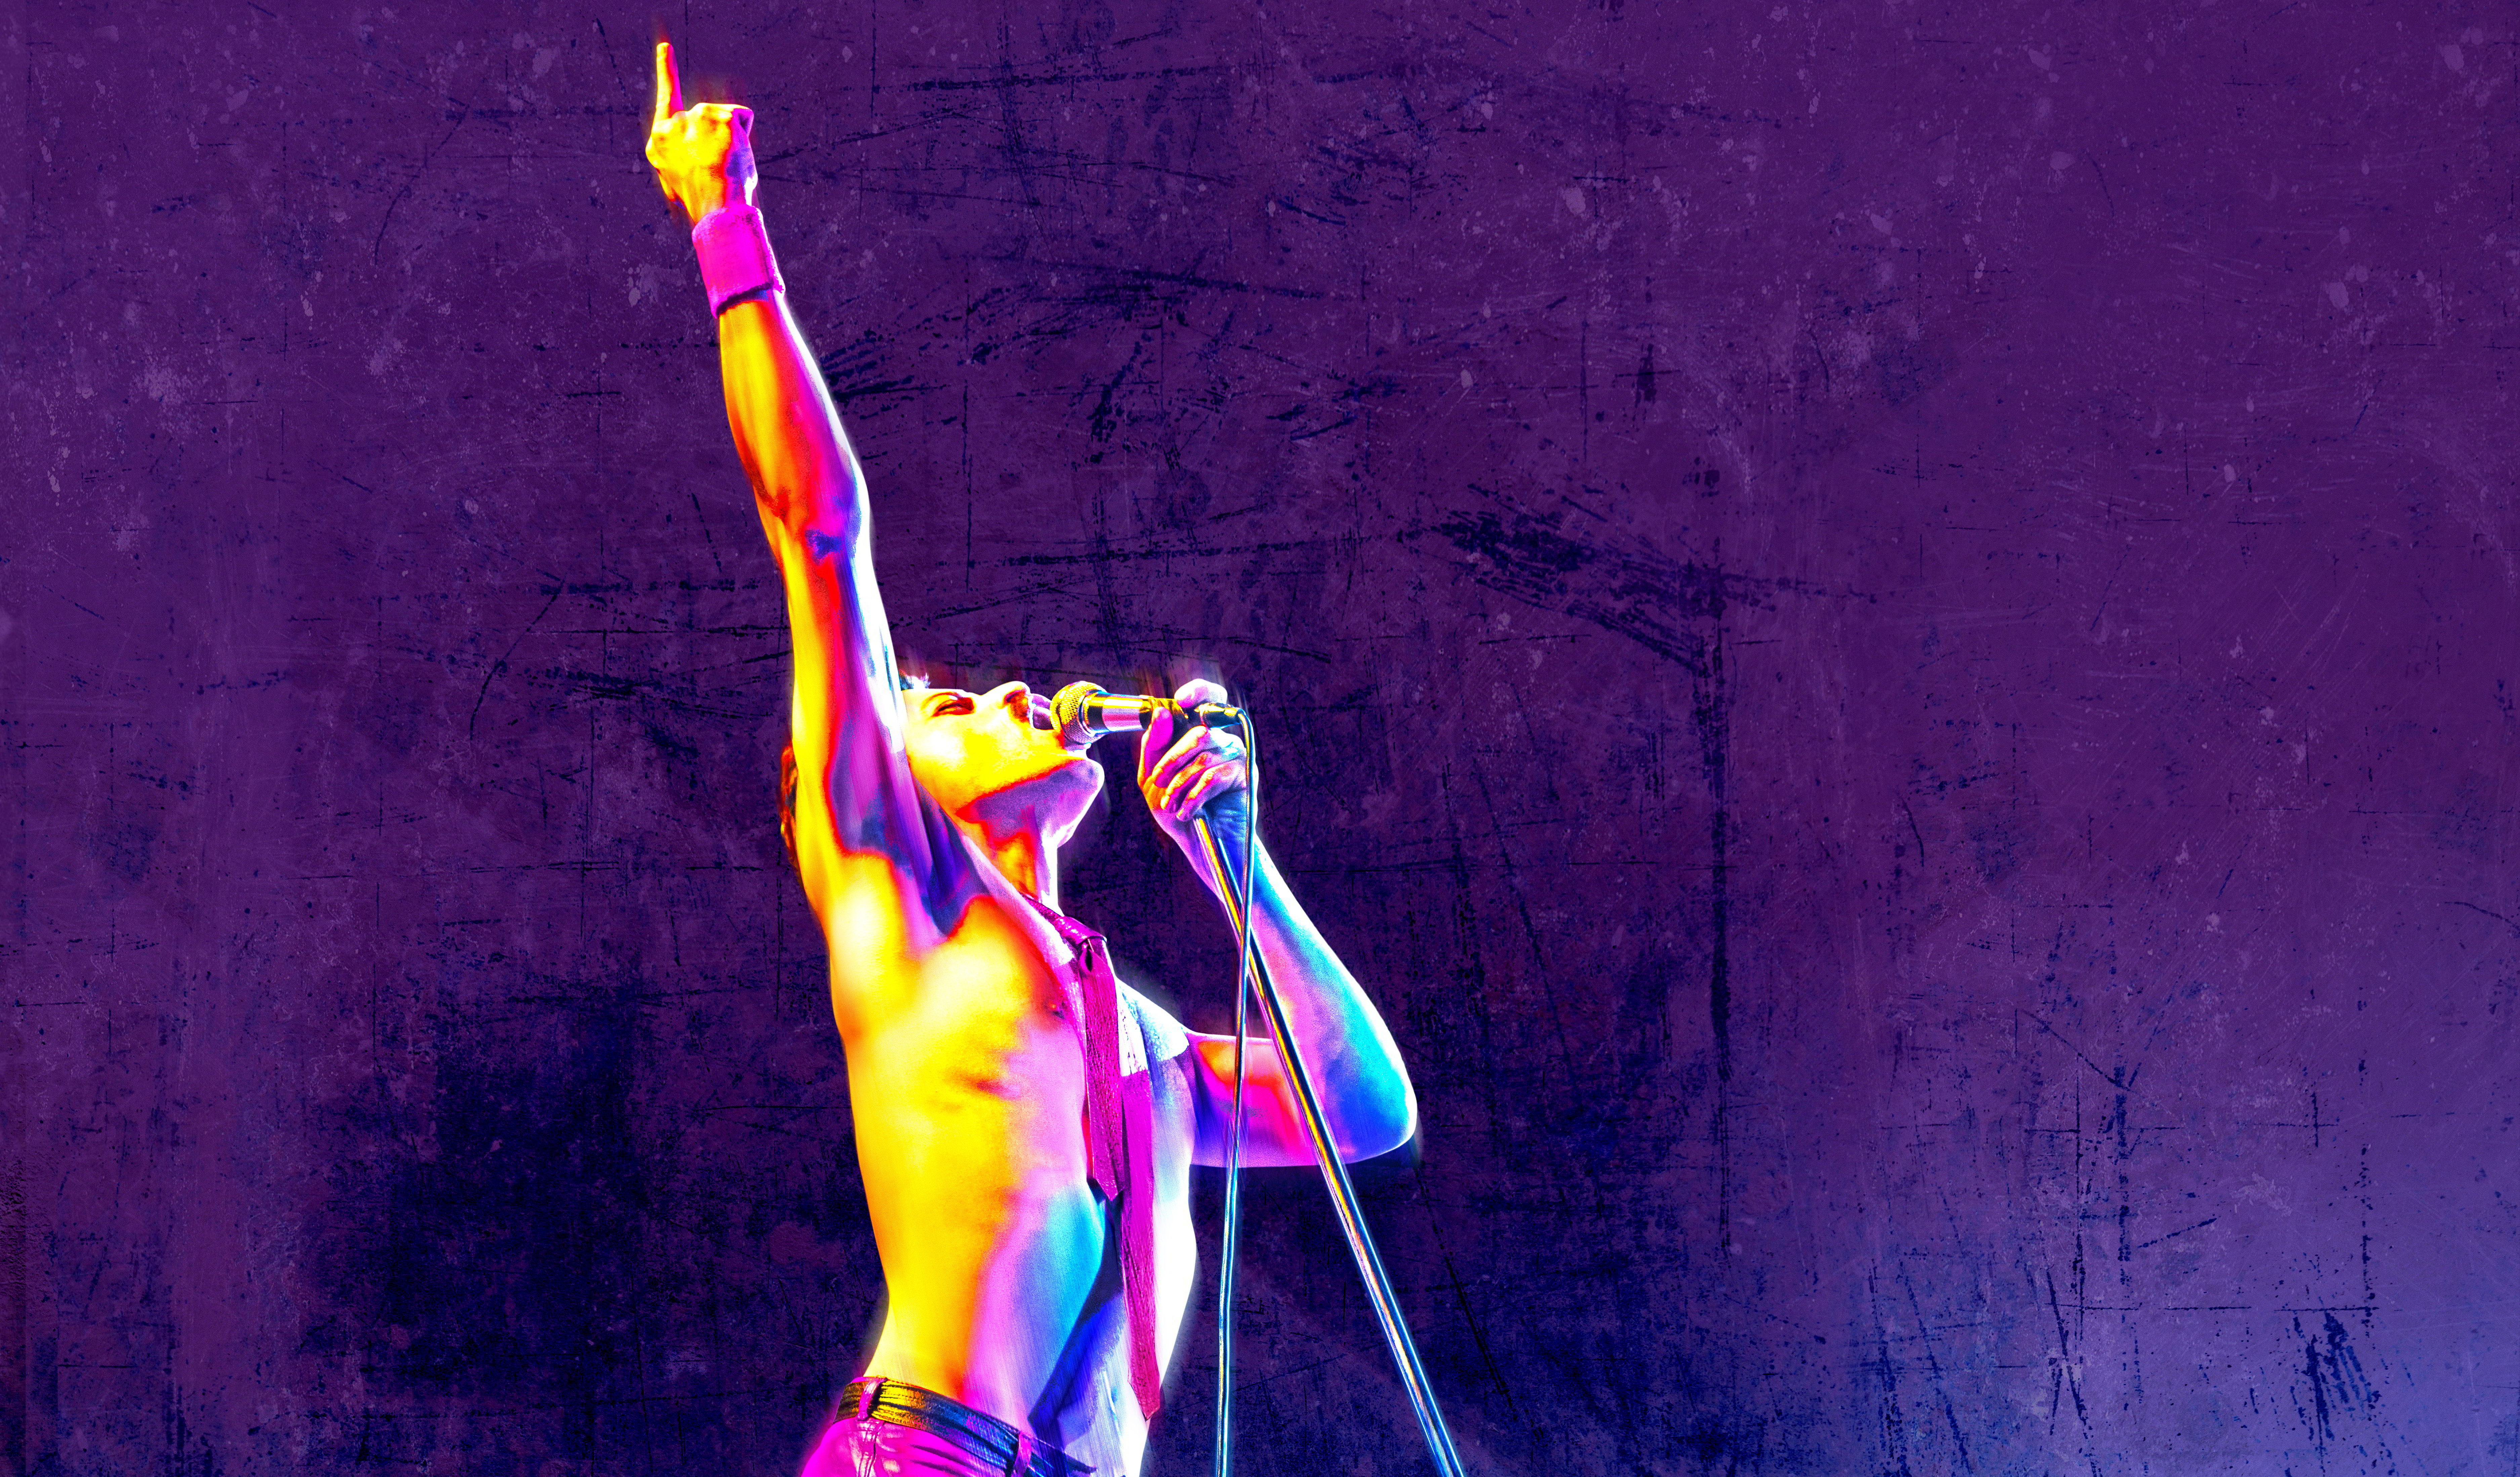 Bohemian Rhapsody download the new version for mac